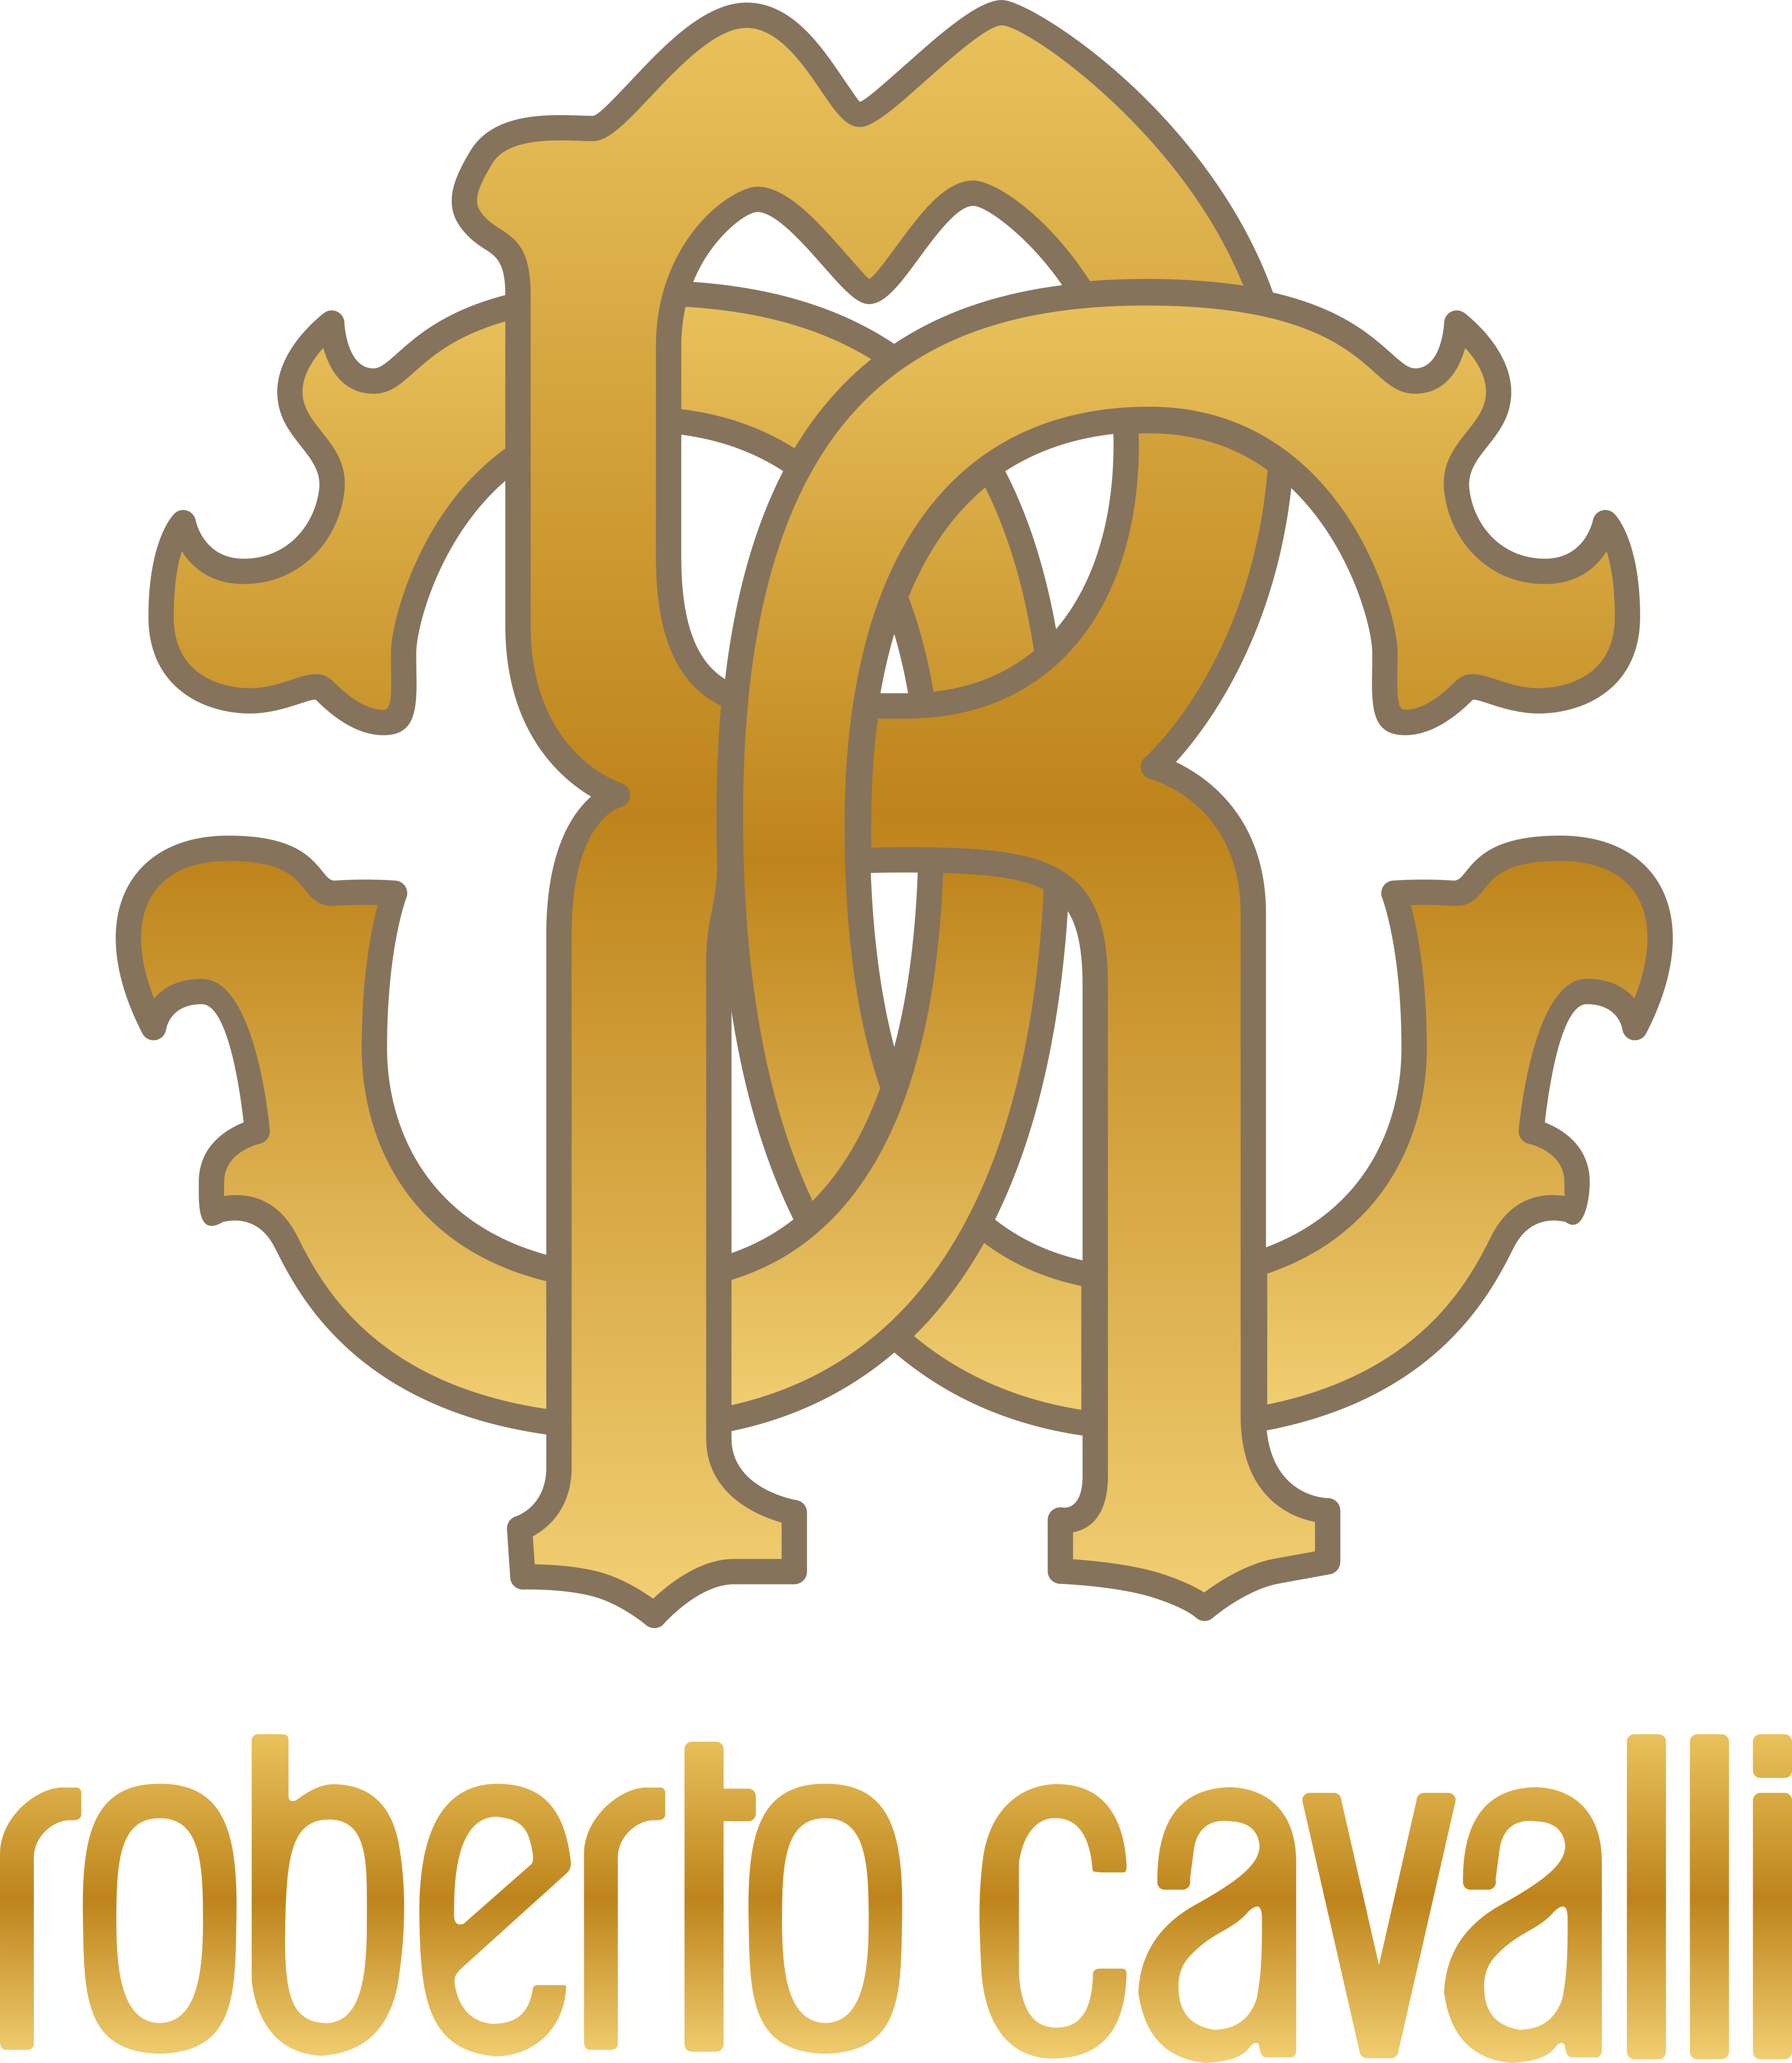 Roberto Cavalli – Logos Download